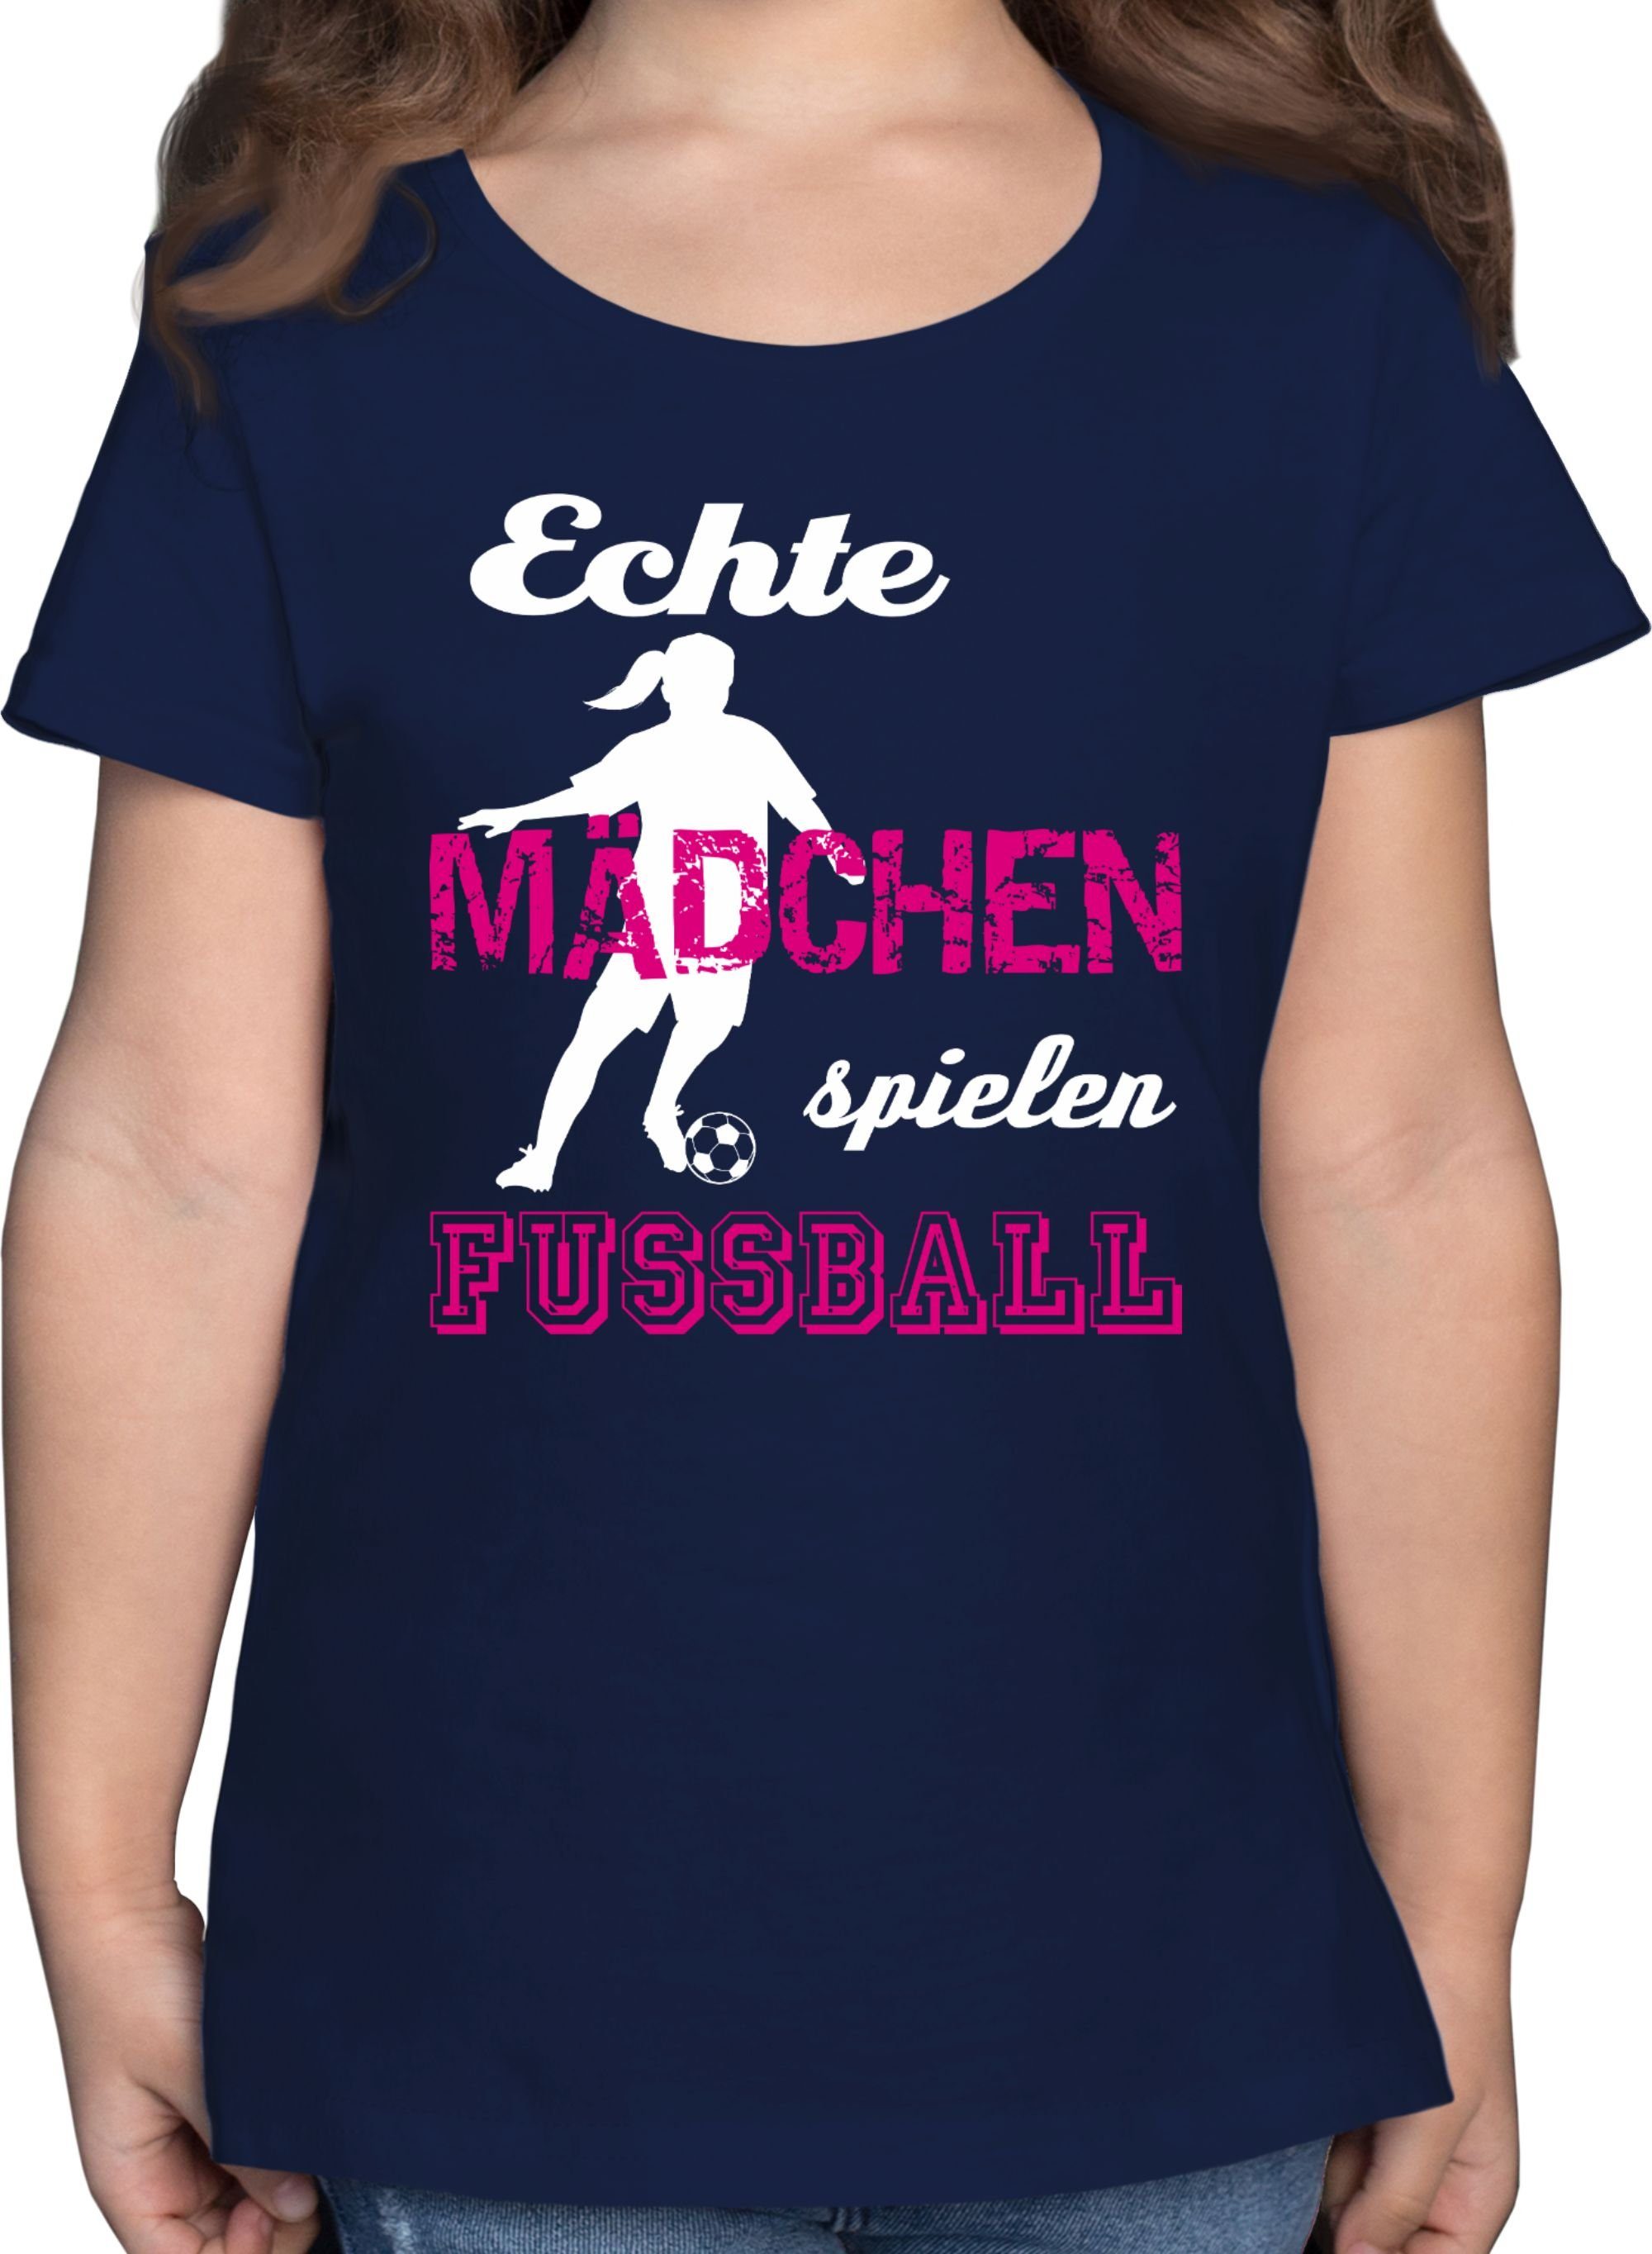 Kleidung Kinder Echte Dunkelblau spielen Sport T-Shirt Shirtracer 2 Fußball Mädchen